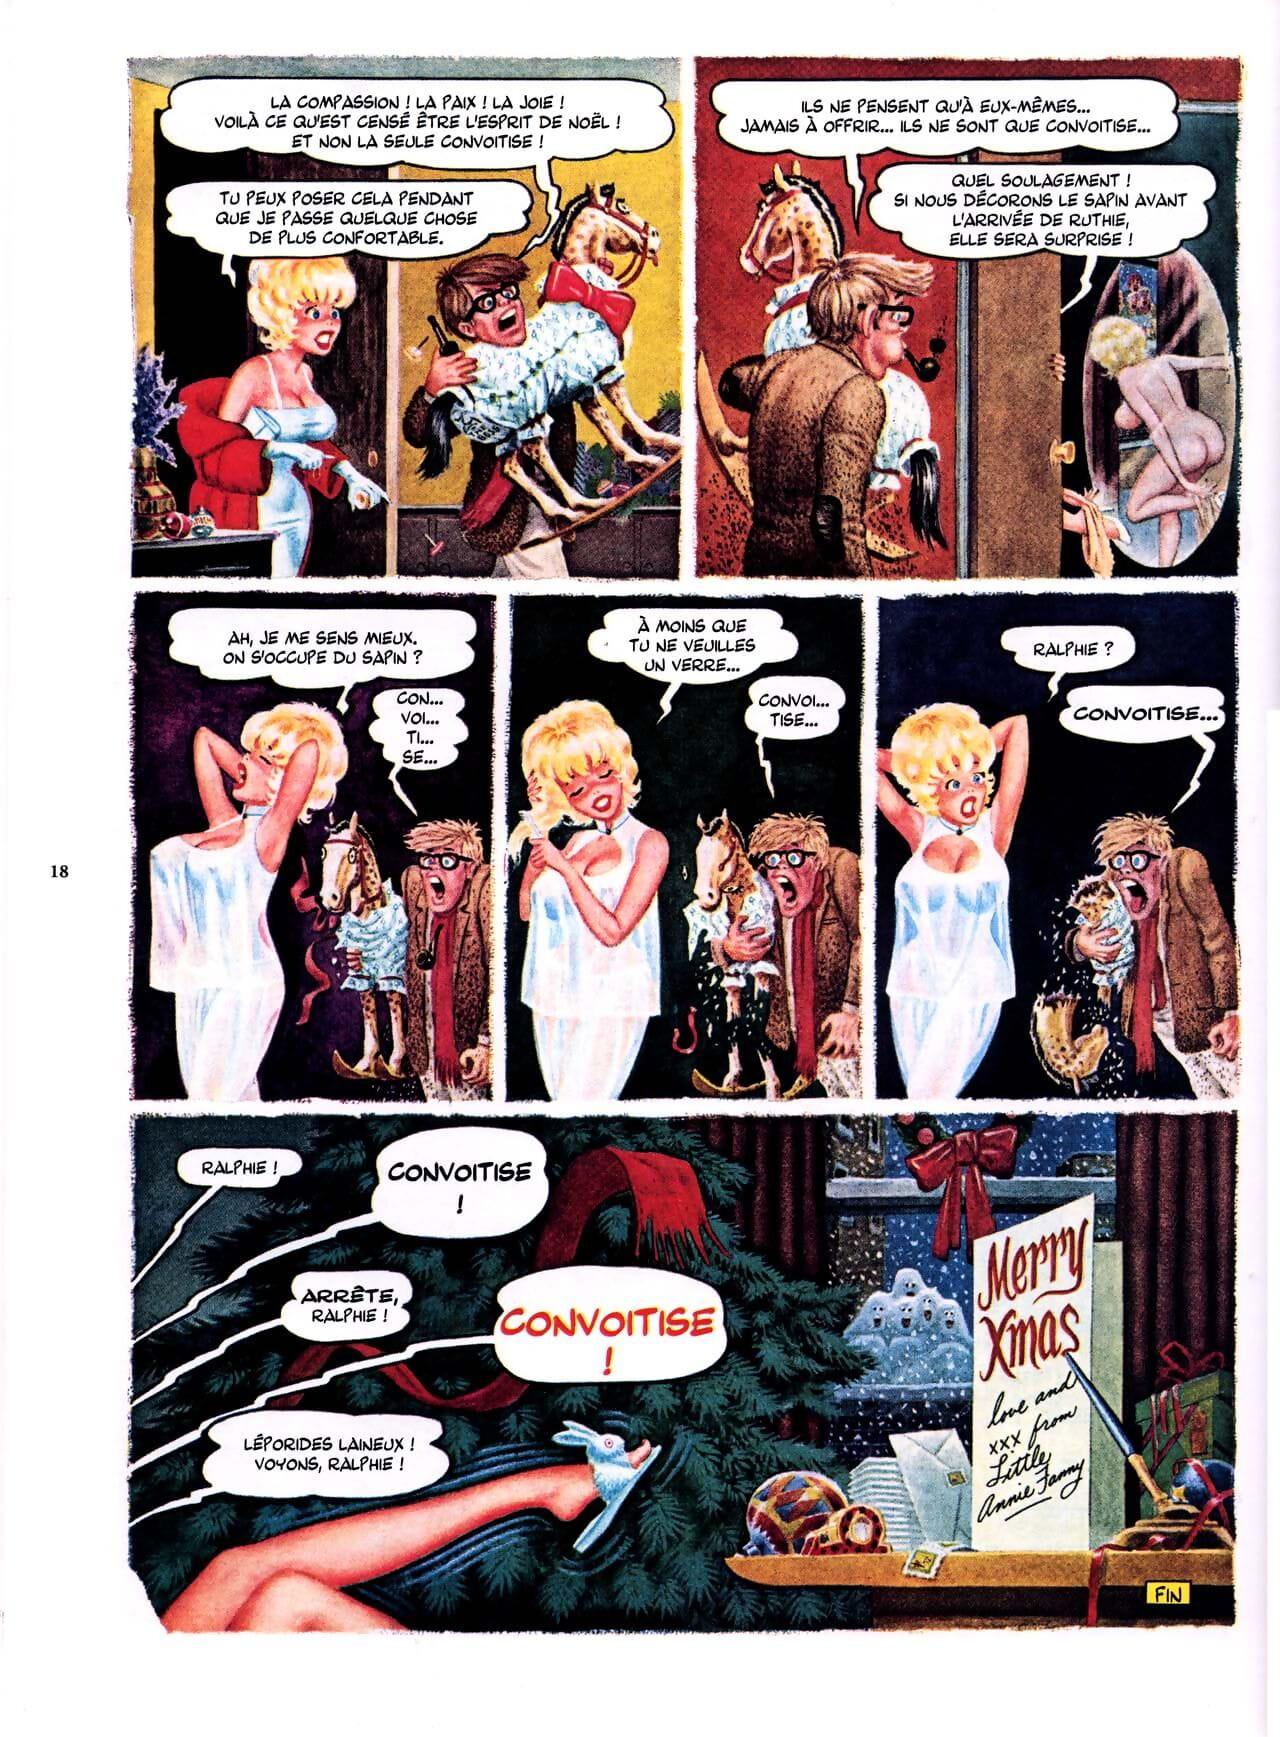 Playboys Little Annie Fanny Vol. 1 - 1962-1965 page 1